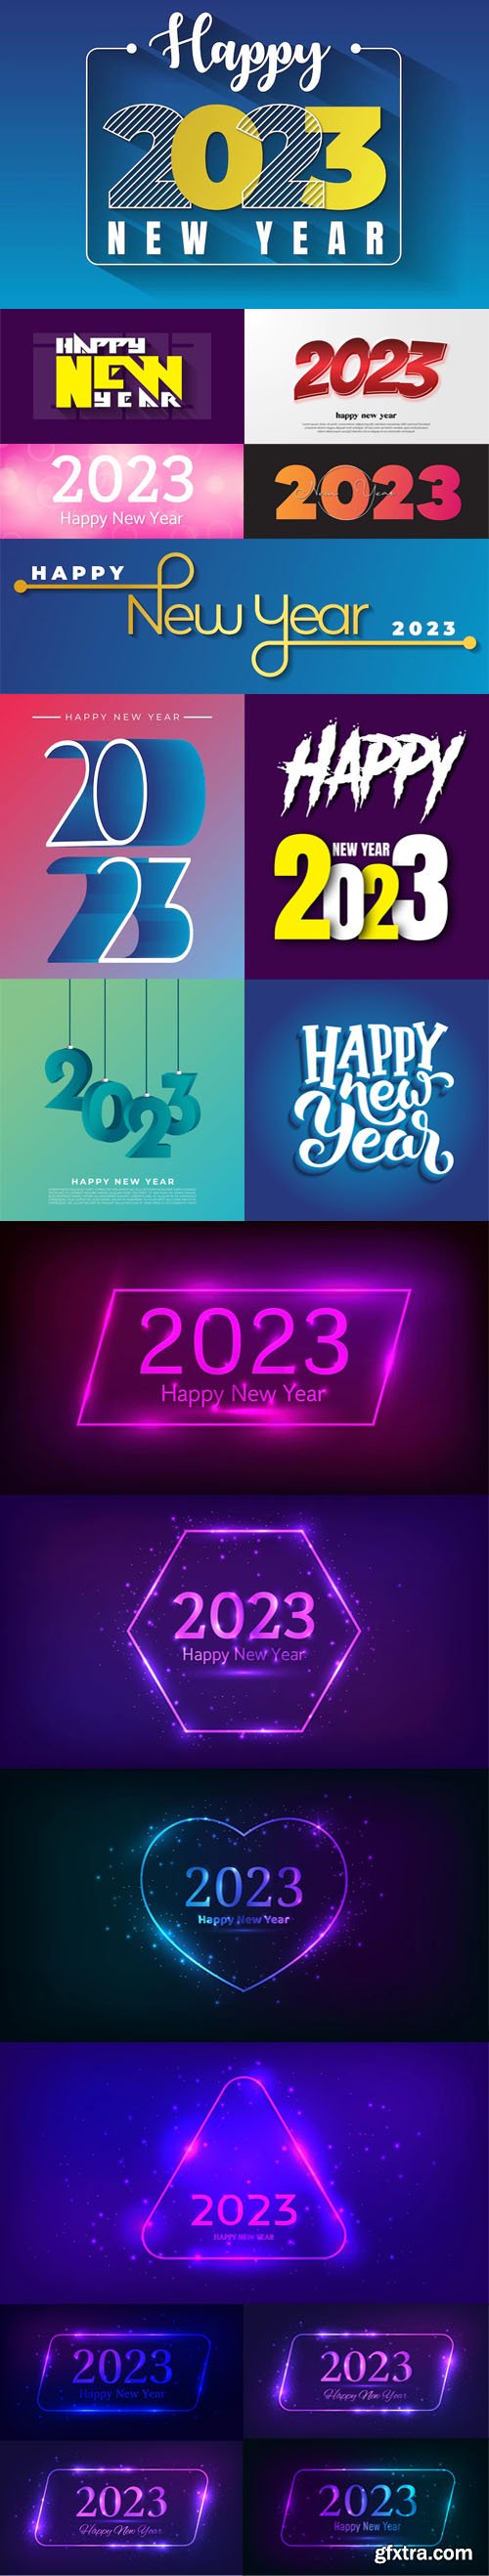 Happy New Year 2023 - 16 Creative Vector Design Templates